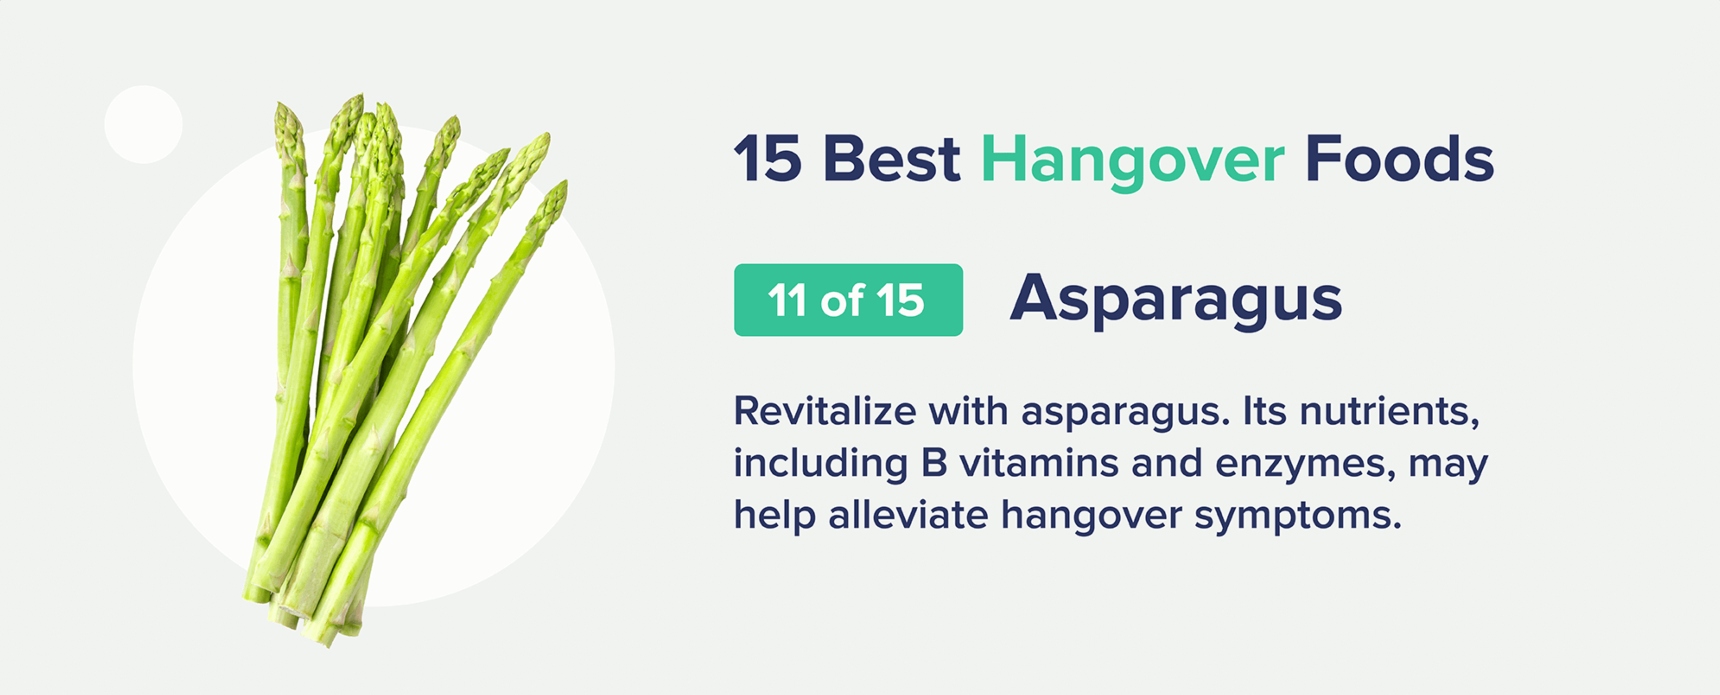 asparagus best hangover foods